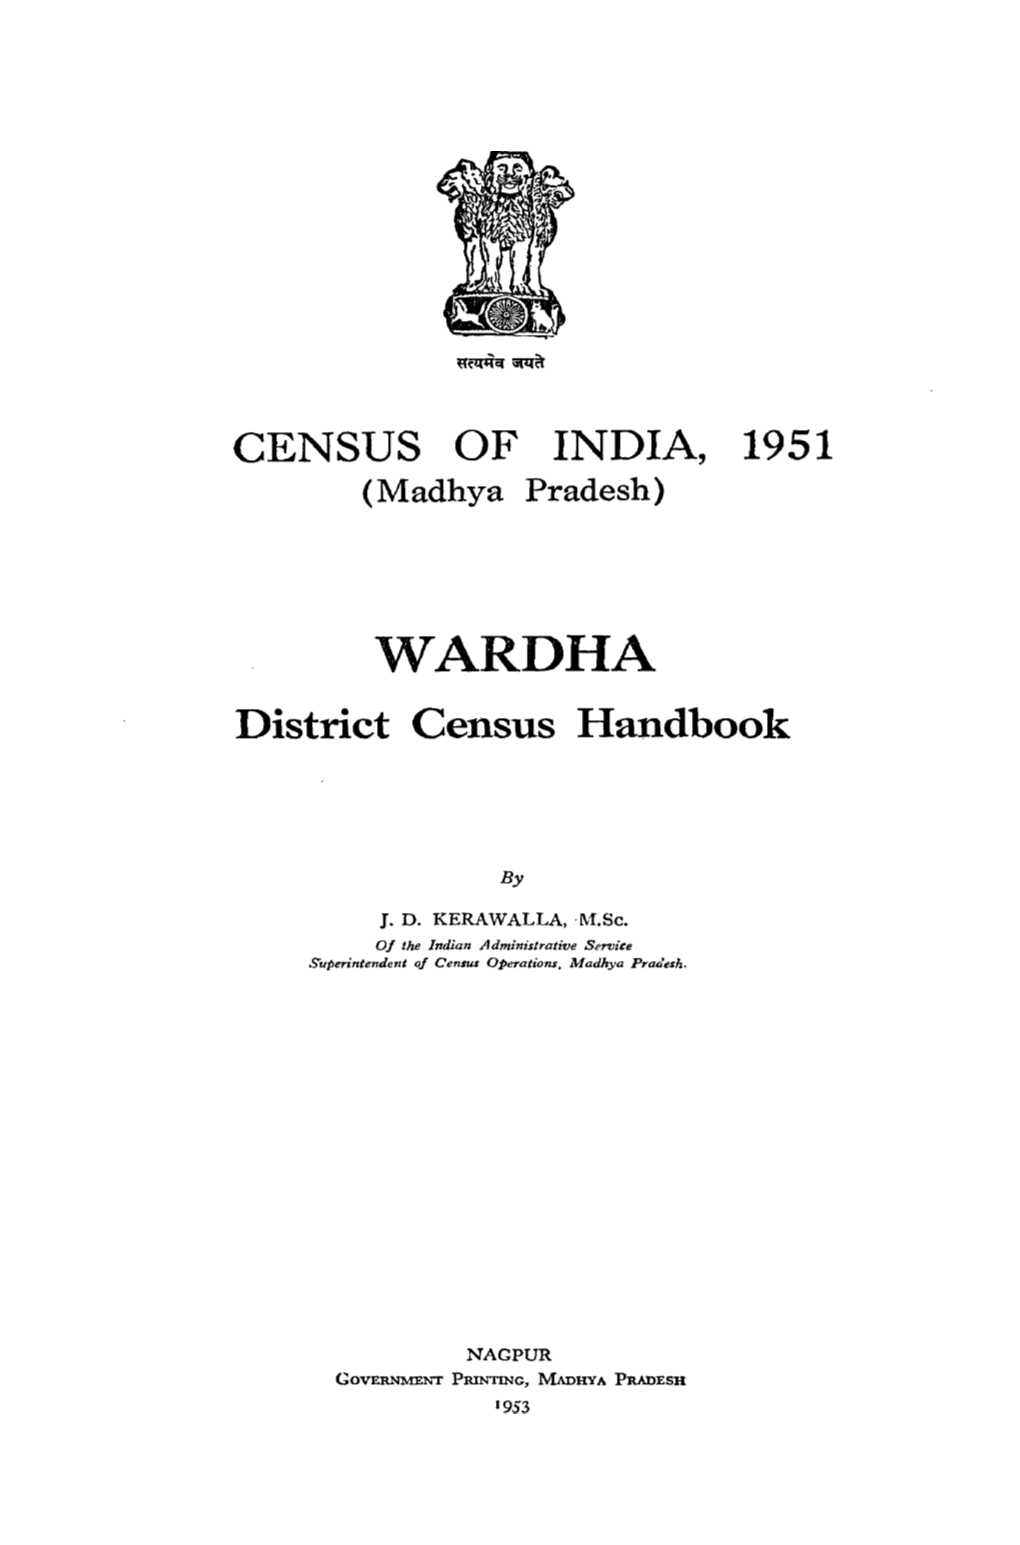 WARDHA District Census Handbook